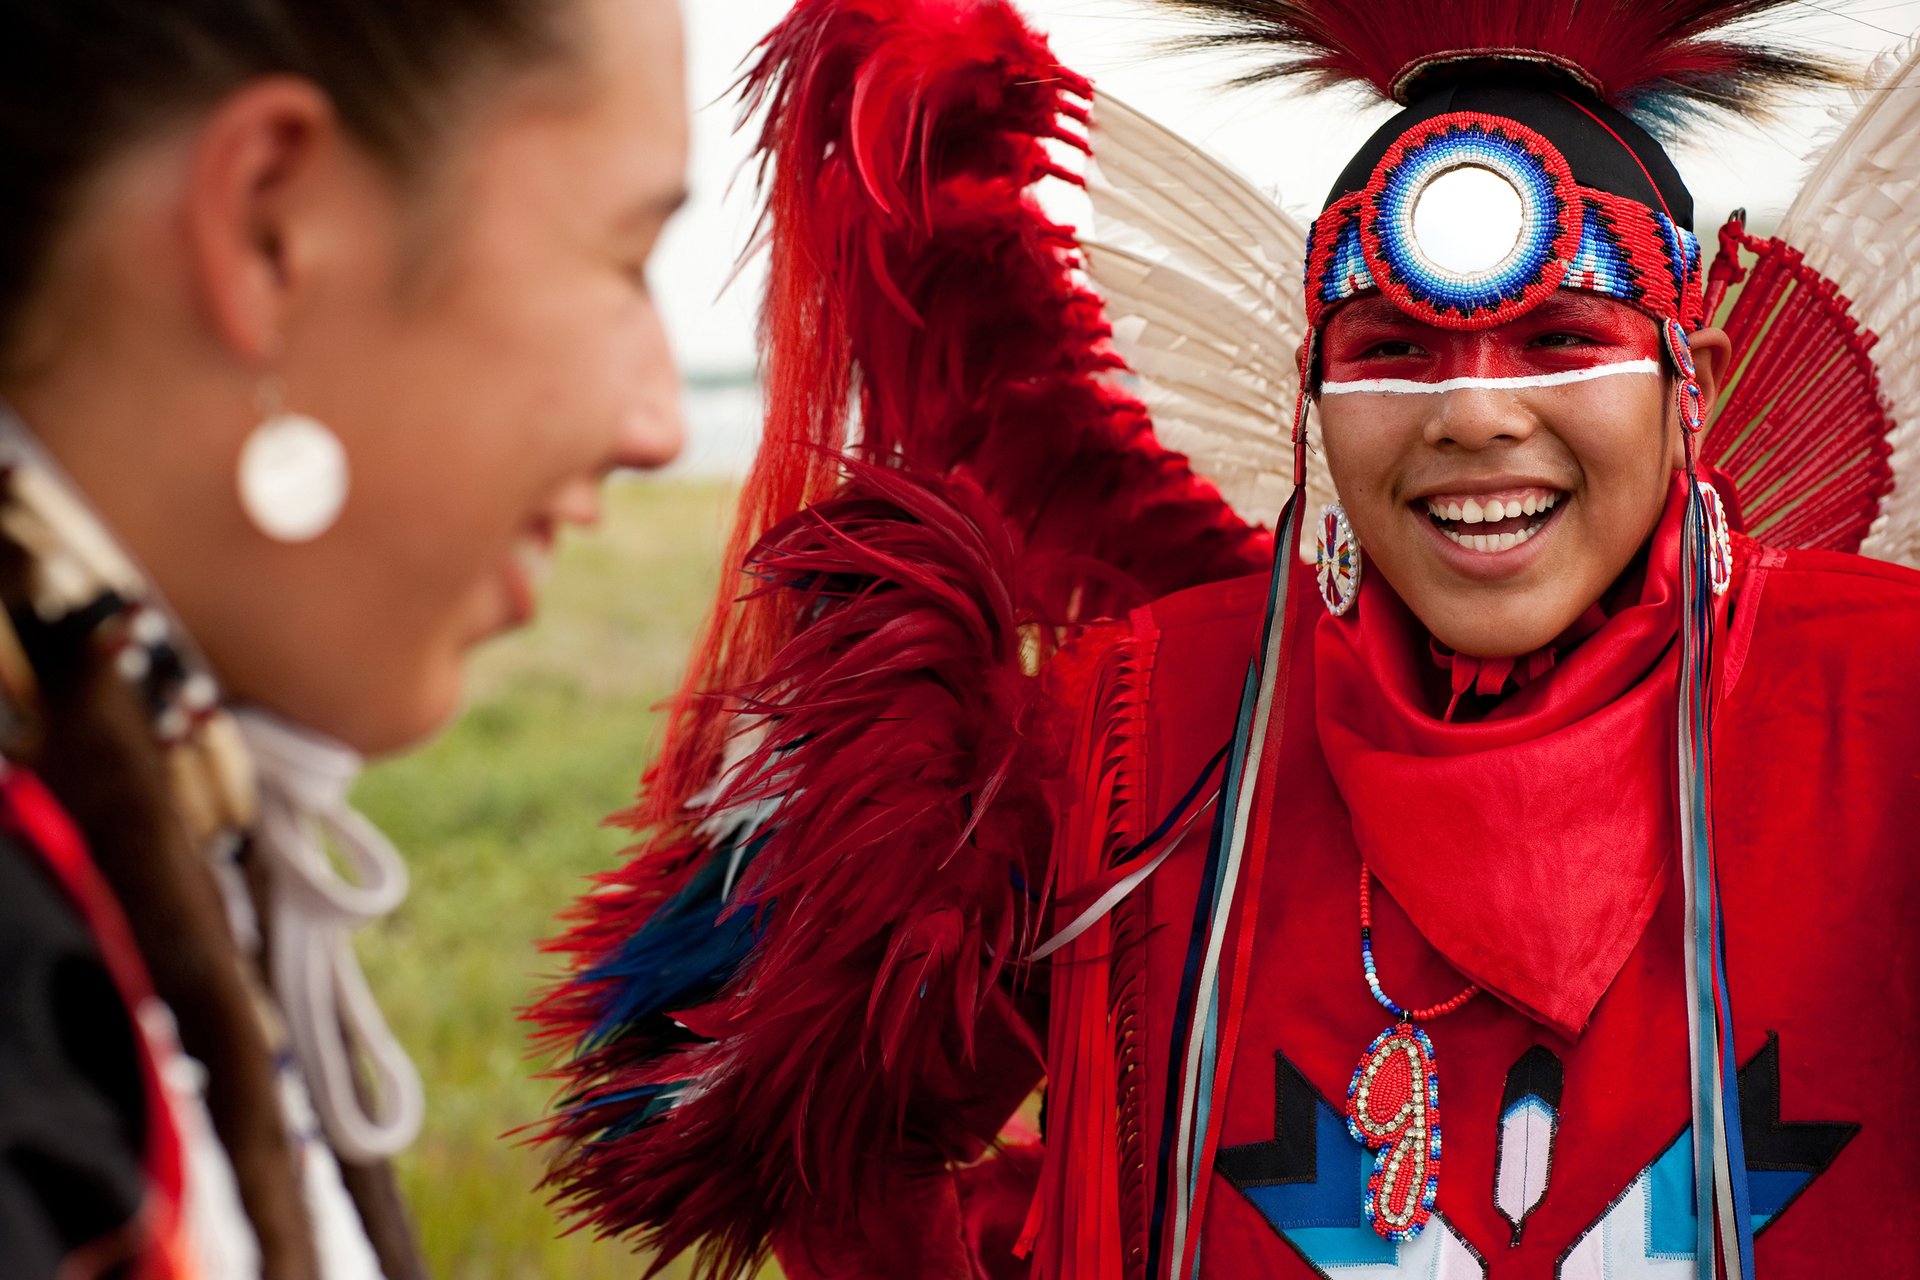 Indigenous woman dressed in regalia smiling at Indigenous man